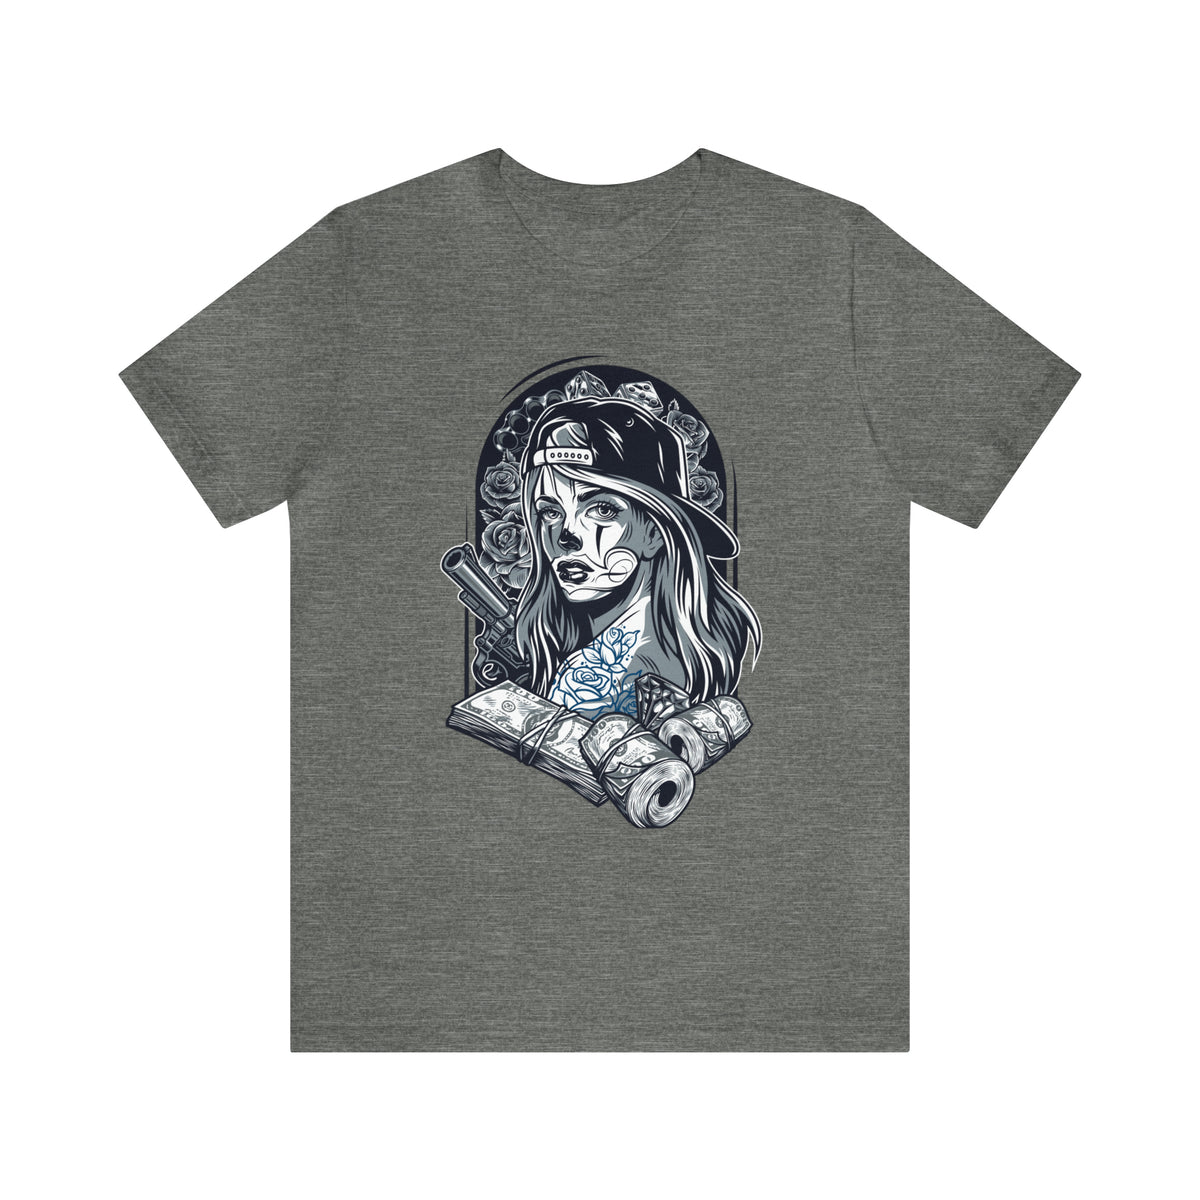 Vintage Girl With Money T Shirt Design